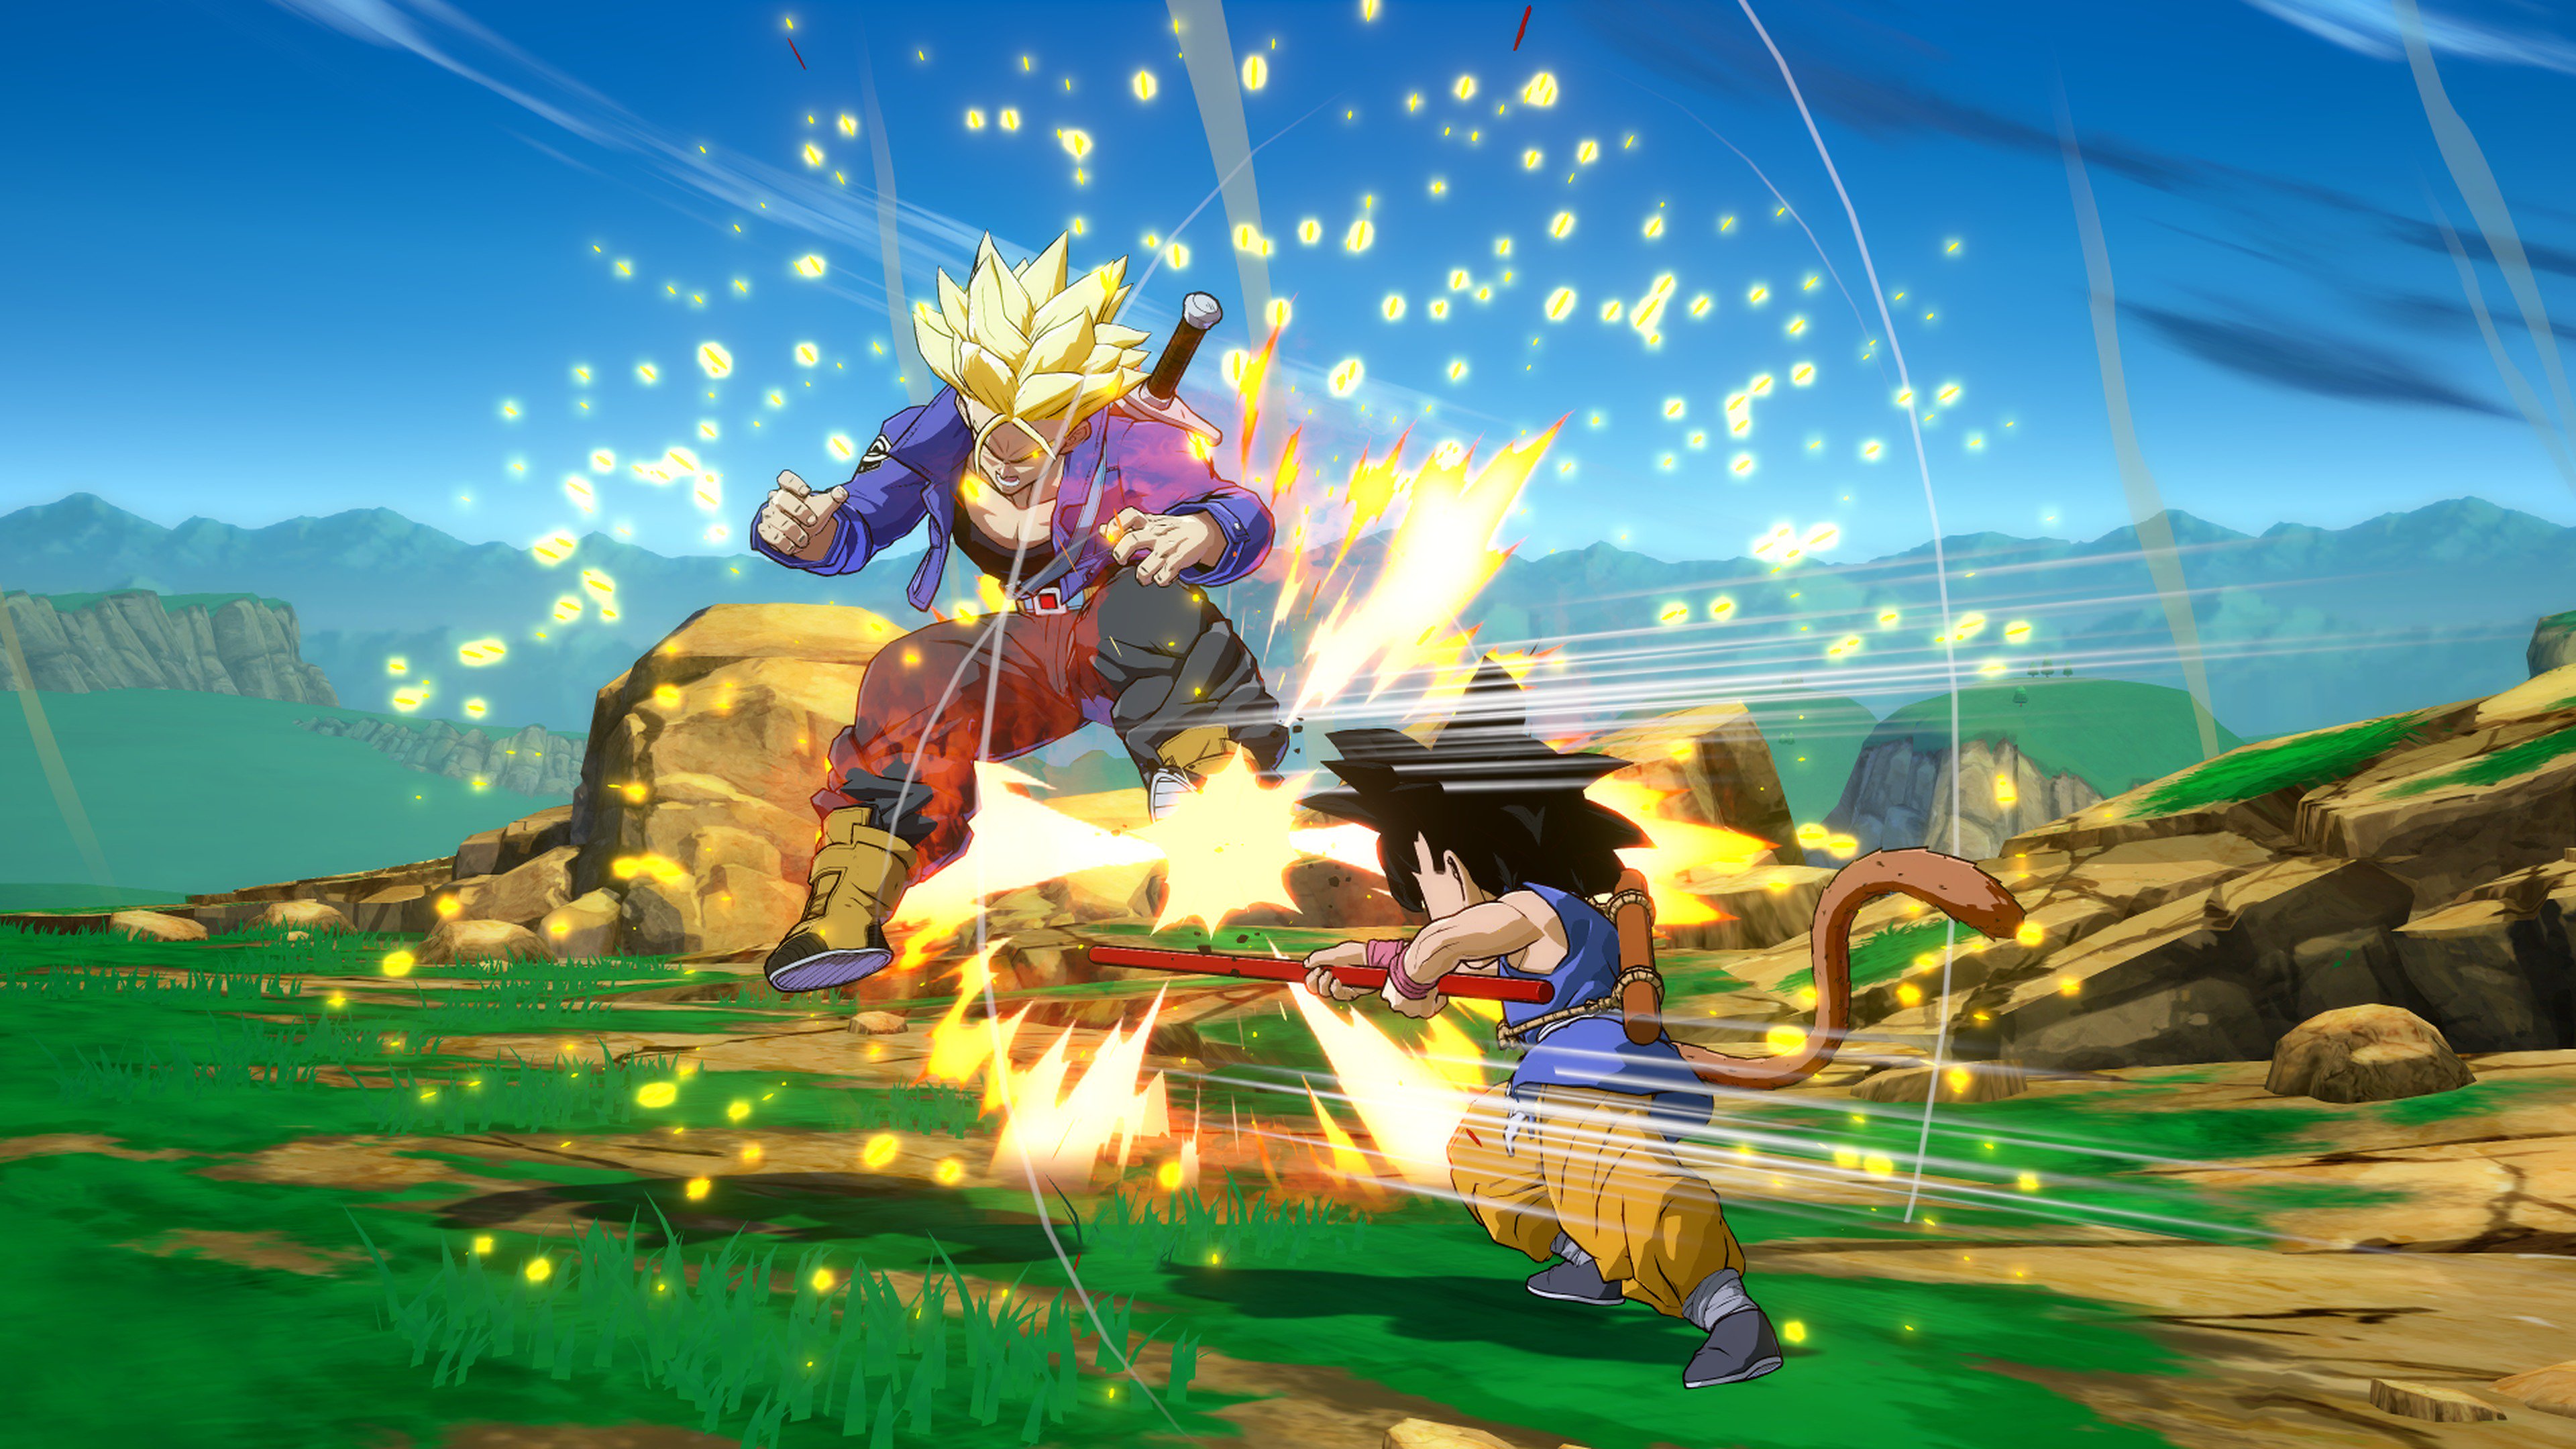 News Additional Screenshots of "Dragon Ball FighterZ